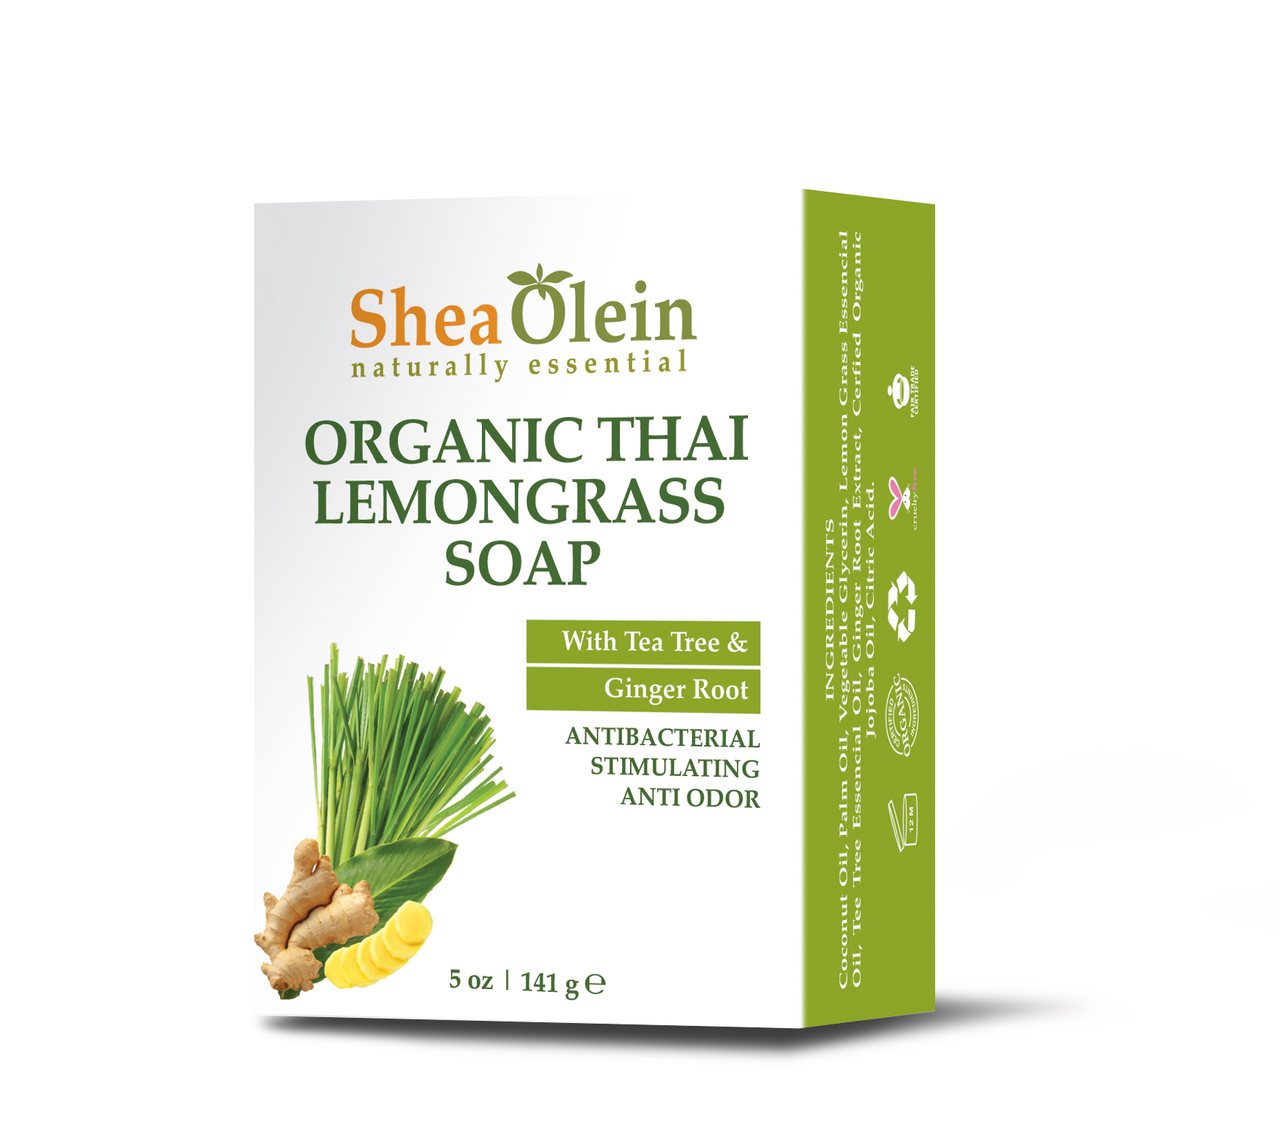 Shea Olein-Organics Thai Lemongrass Soap